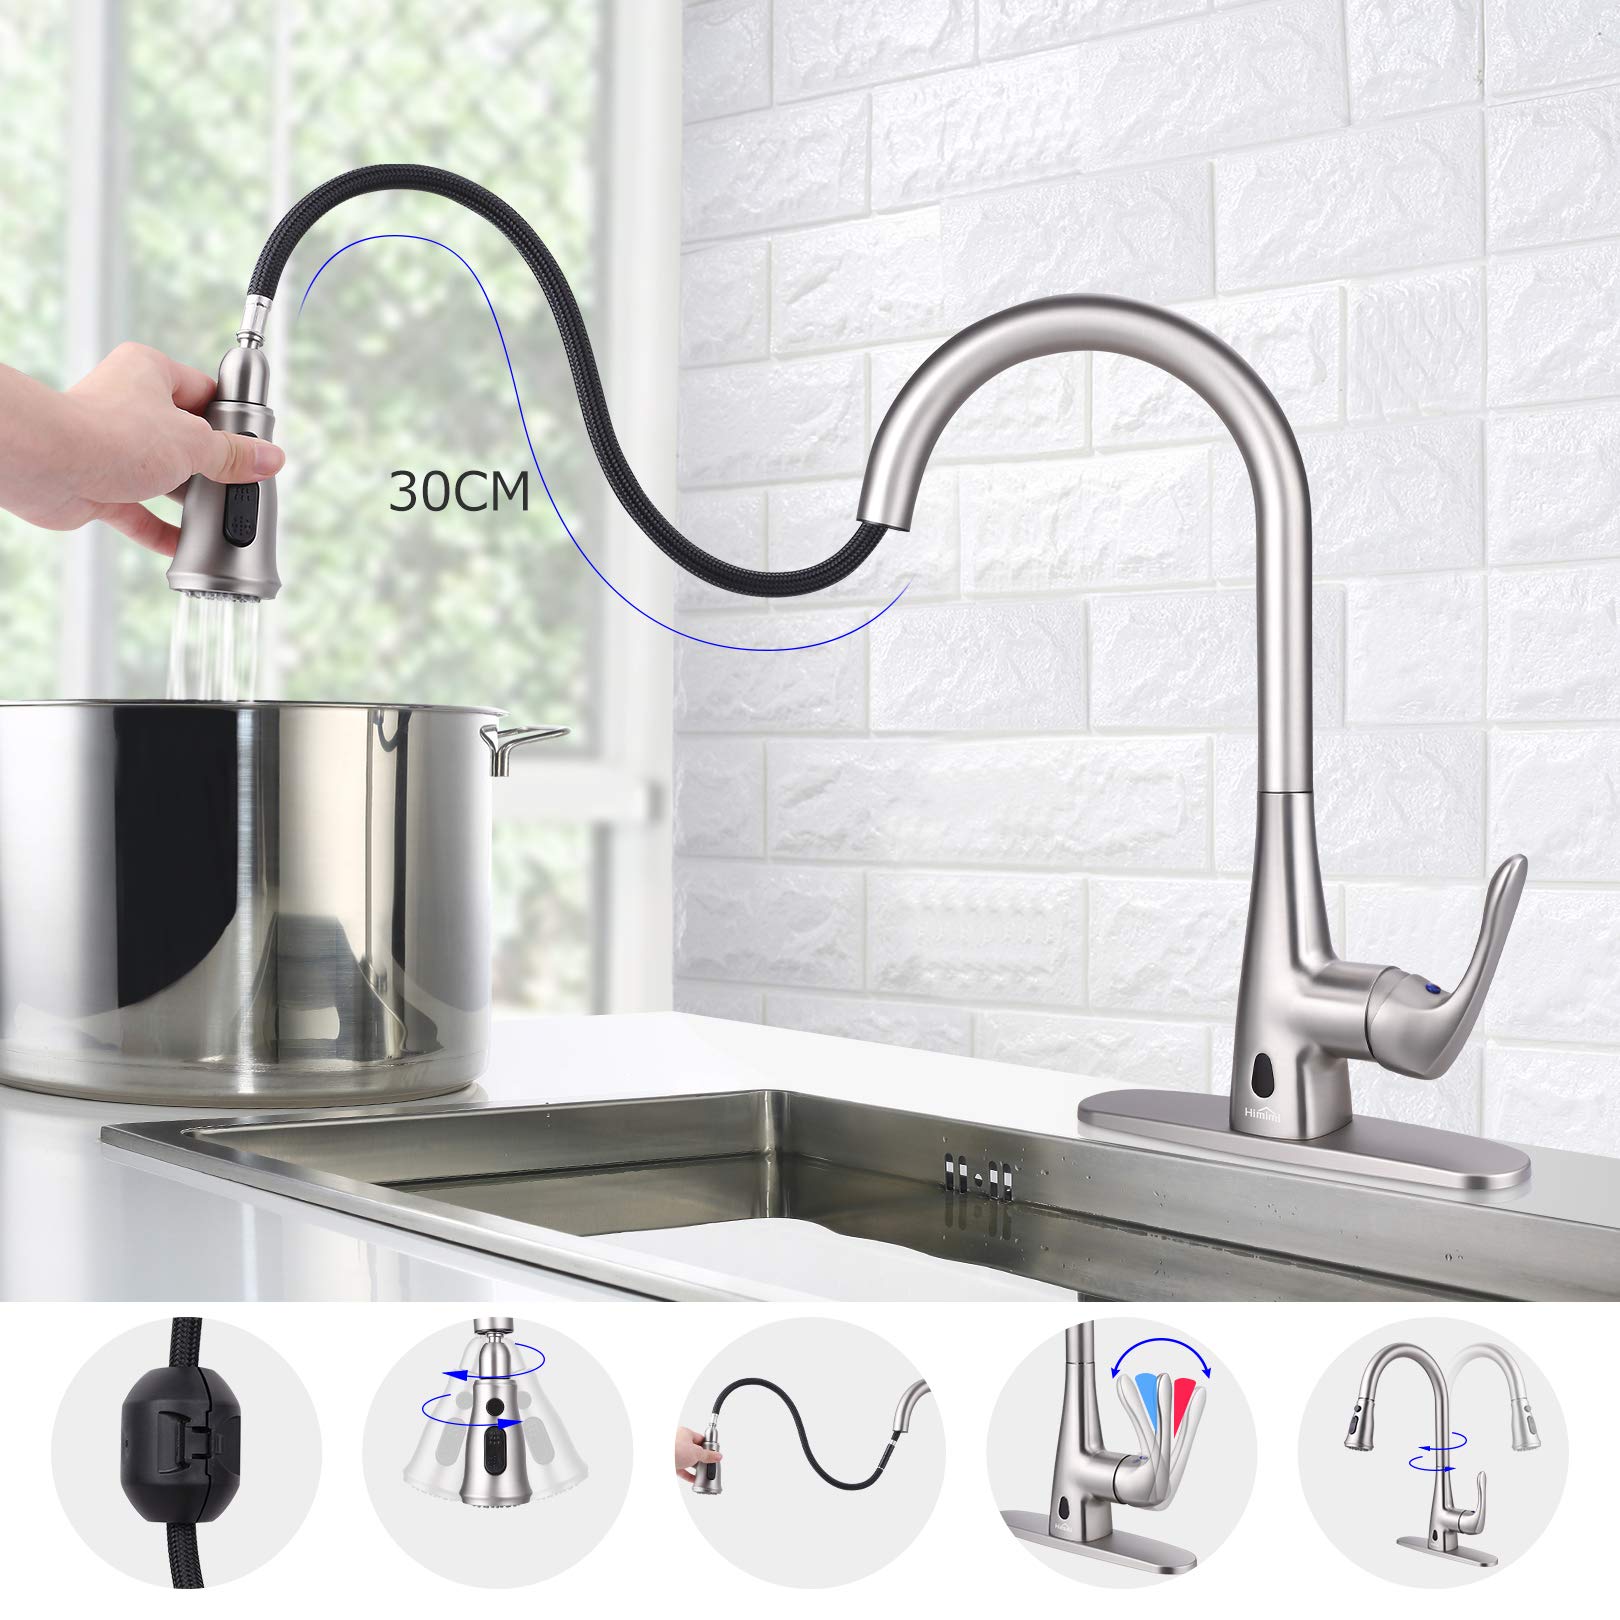 Touchless Kitchen Faucet, Himimi Single Handle Pull Down Sprayer Kitchen Sink Faucet, Dual Sensor Smart Faucet for Kitchen Sink,1 Hole and 3 Hole Deck Stainless Kitchen Faucet, Fingerprint-Resistant